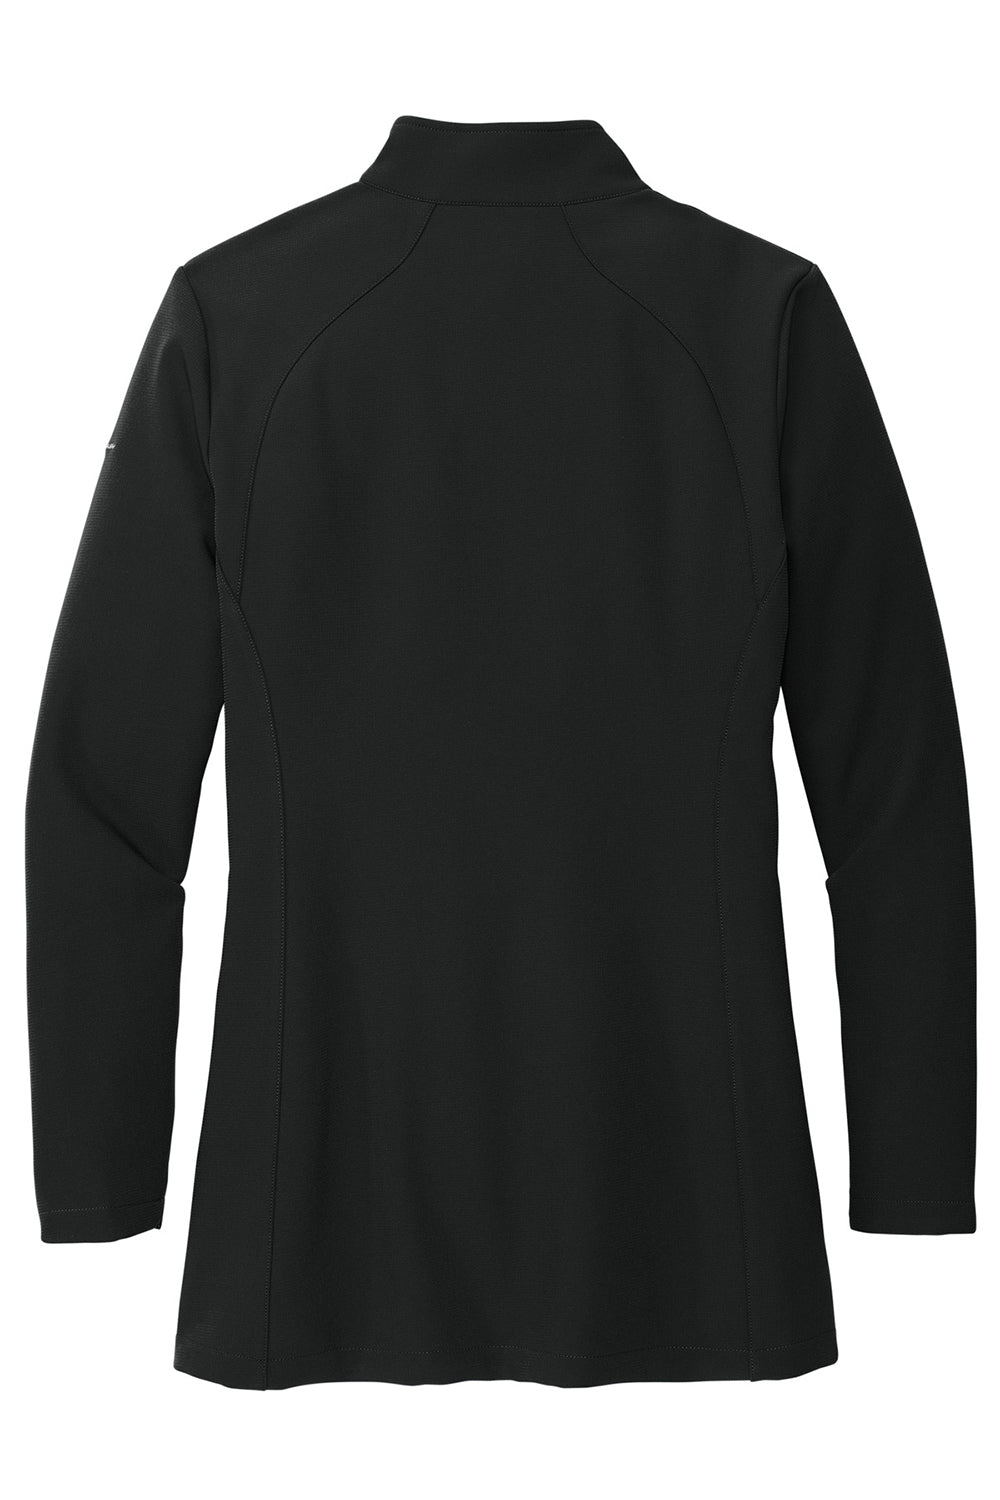 Eddie Bauer EB545 Womens Stretch Water Resistant Full Zip Soft Shell Jacket Deep Black Flat Back